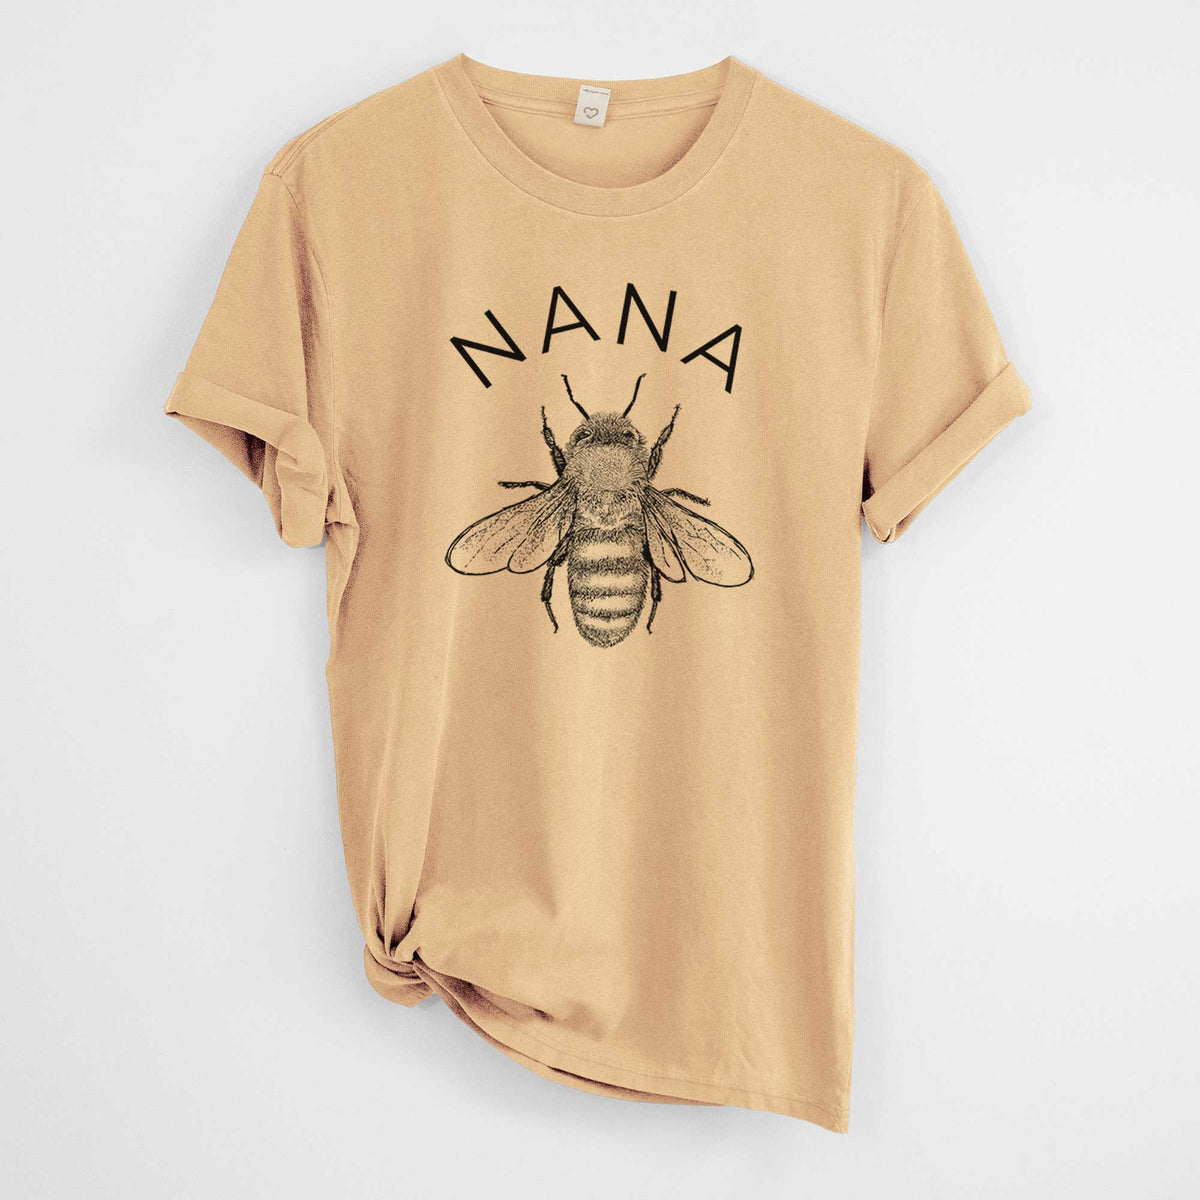 Nana Bee -  Mineral Wash 100% Organic Cotton Short Sleeve